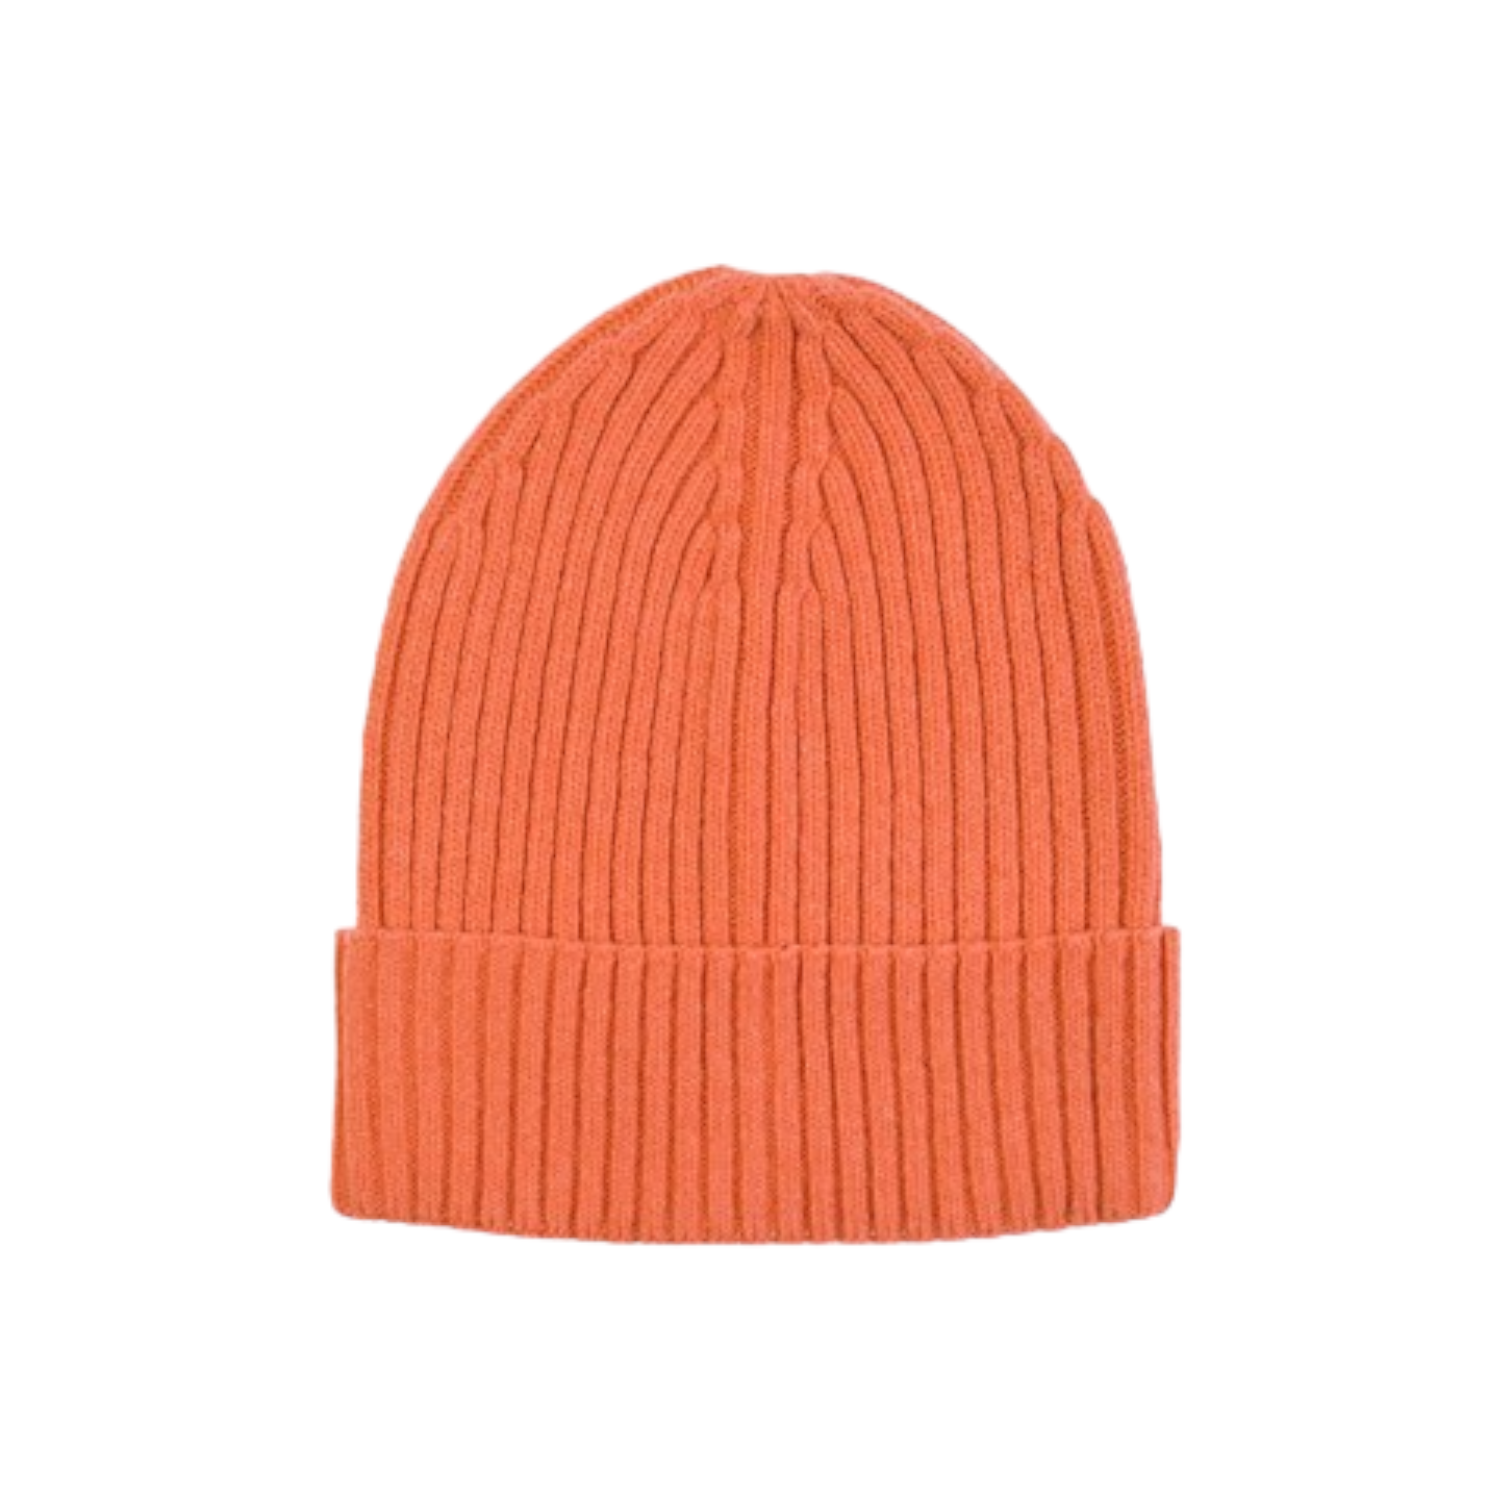 miss-pompom-orange-wool-ribbed-beanie-hat